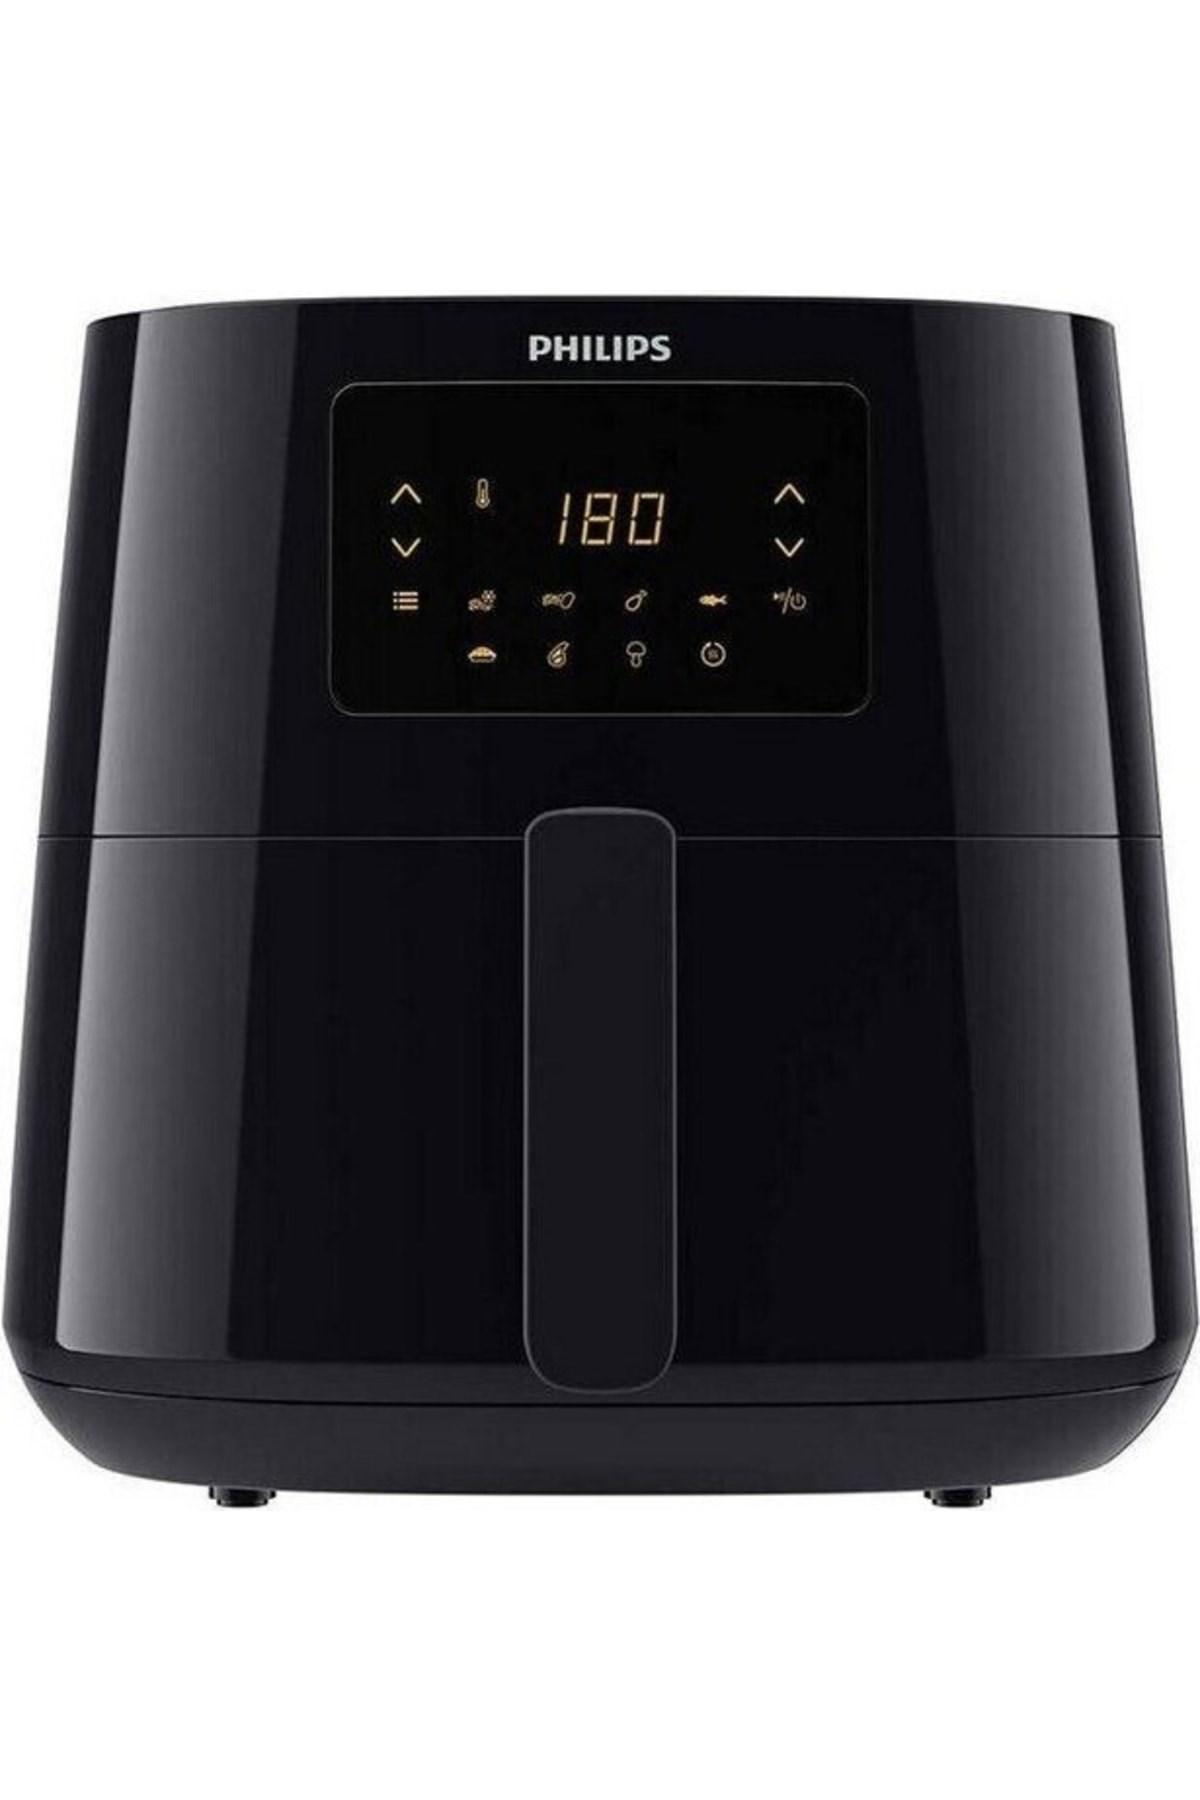 Philips Airfryer Xl Hd9270/96 Essential 2000 W Sıcak Hava Fritözü -İthalatçı Garantilidir.